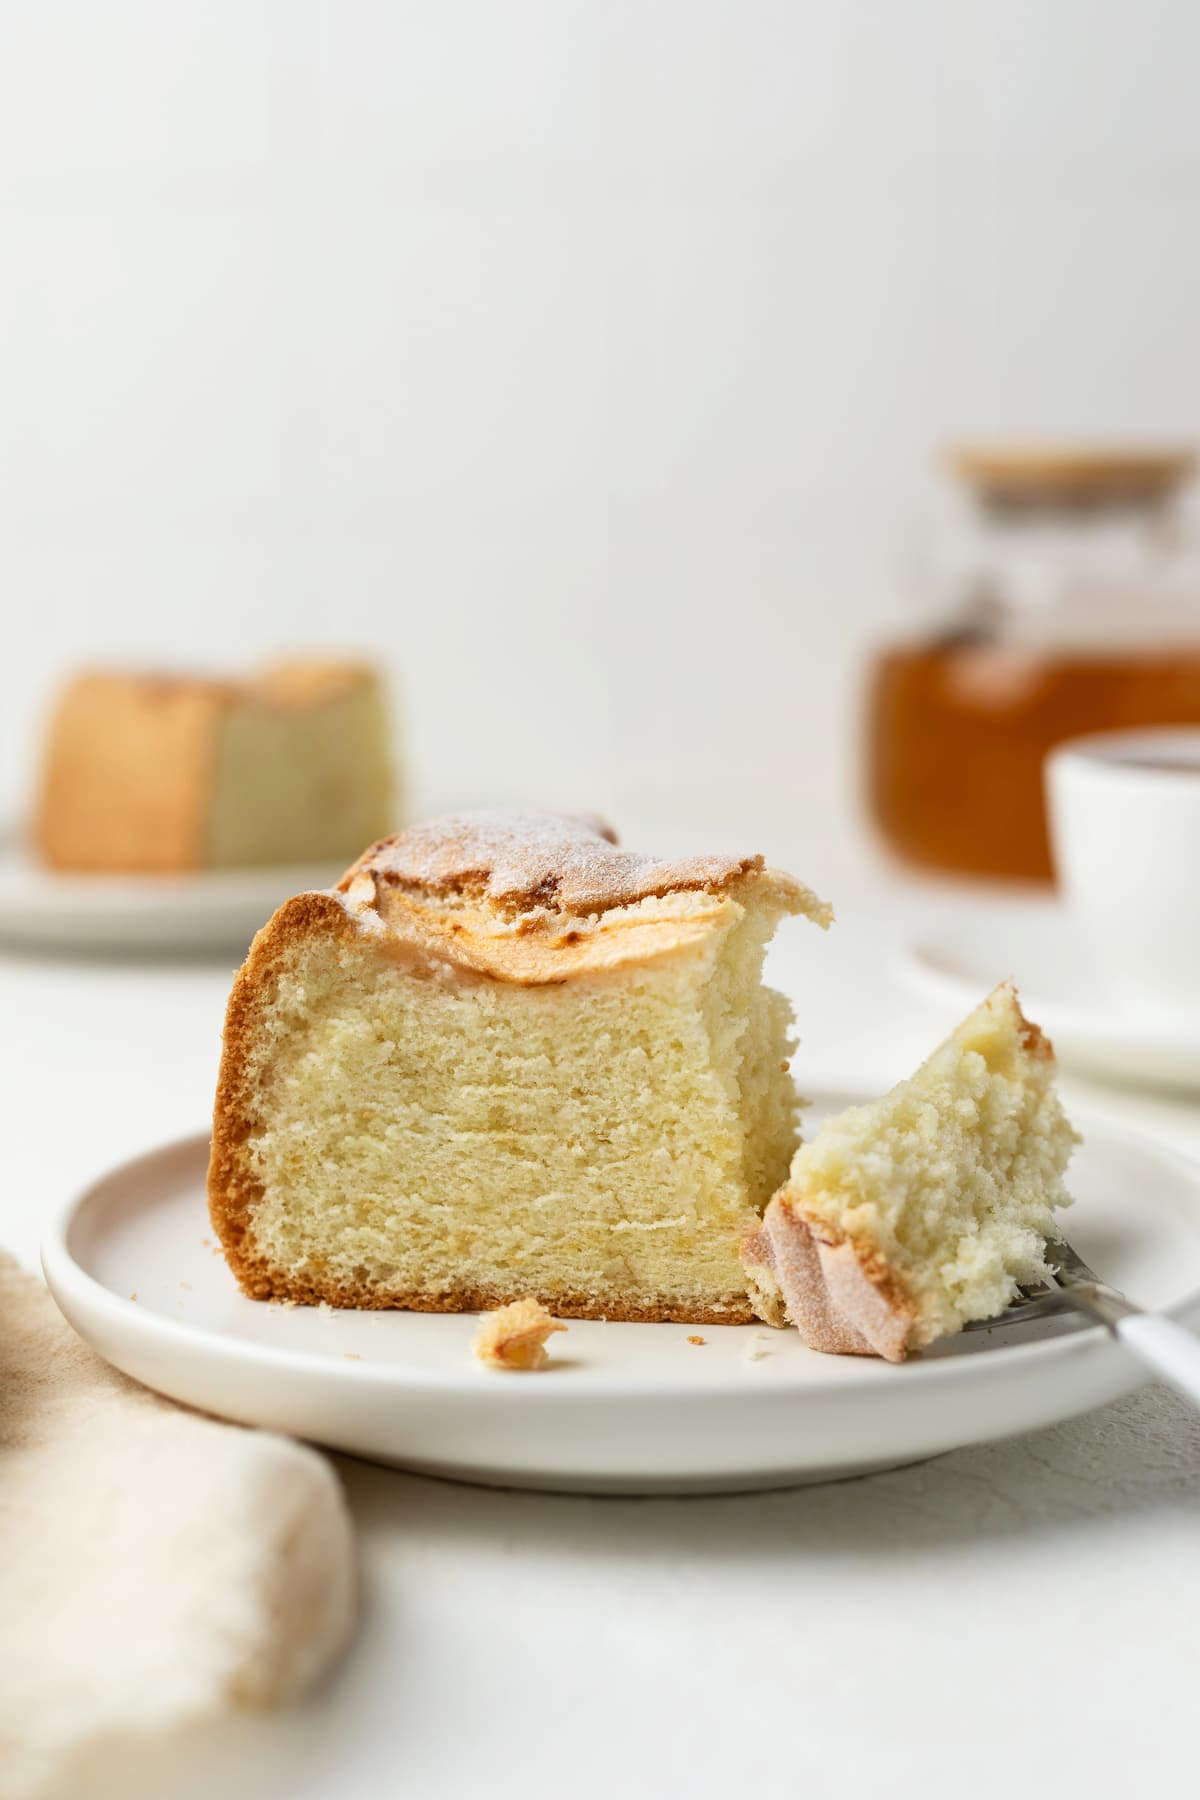 A single slice of apple sponge cake on a dessert plate.